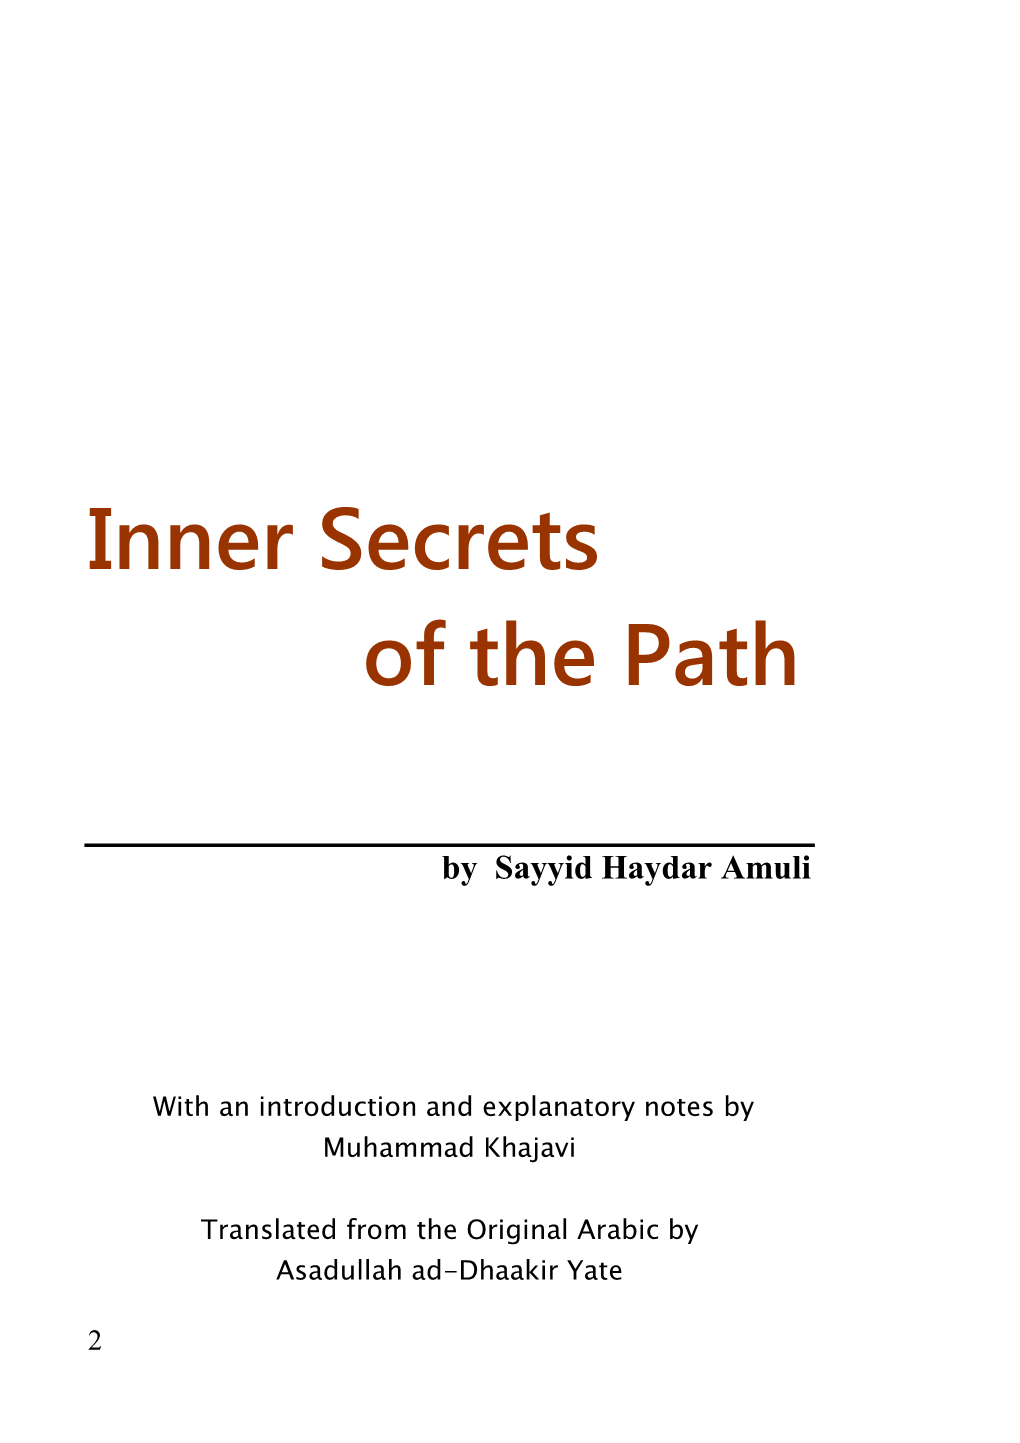 Inner Secrets of the Path